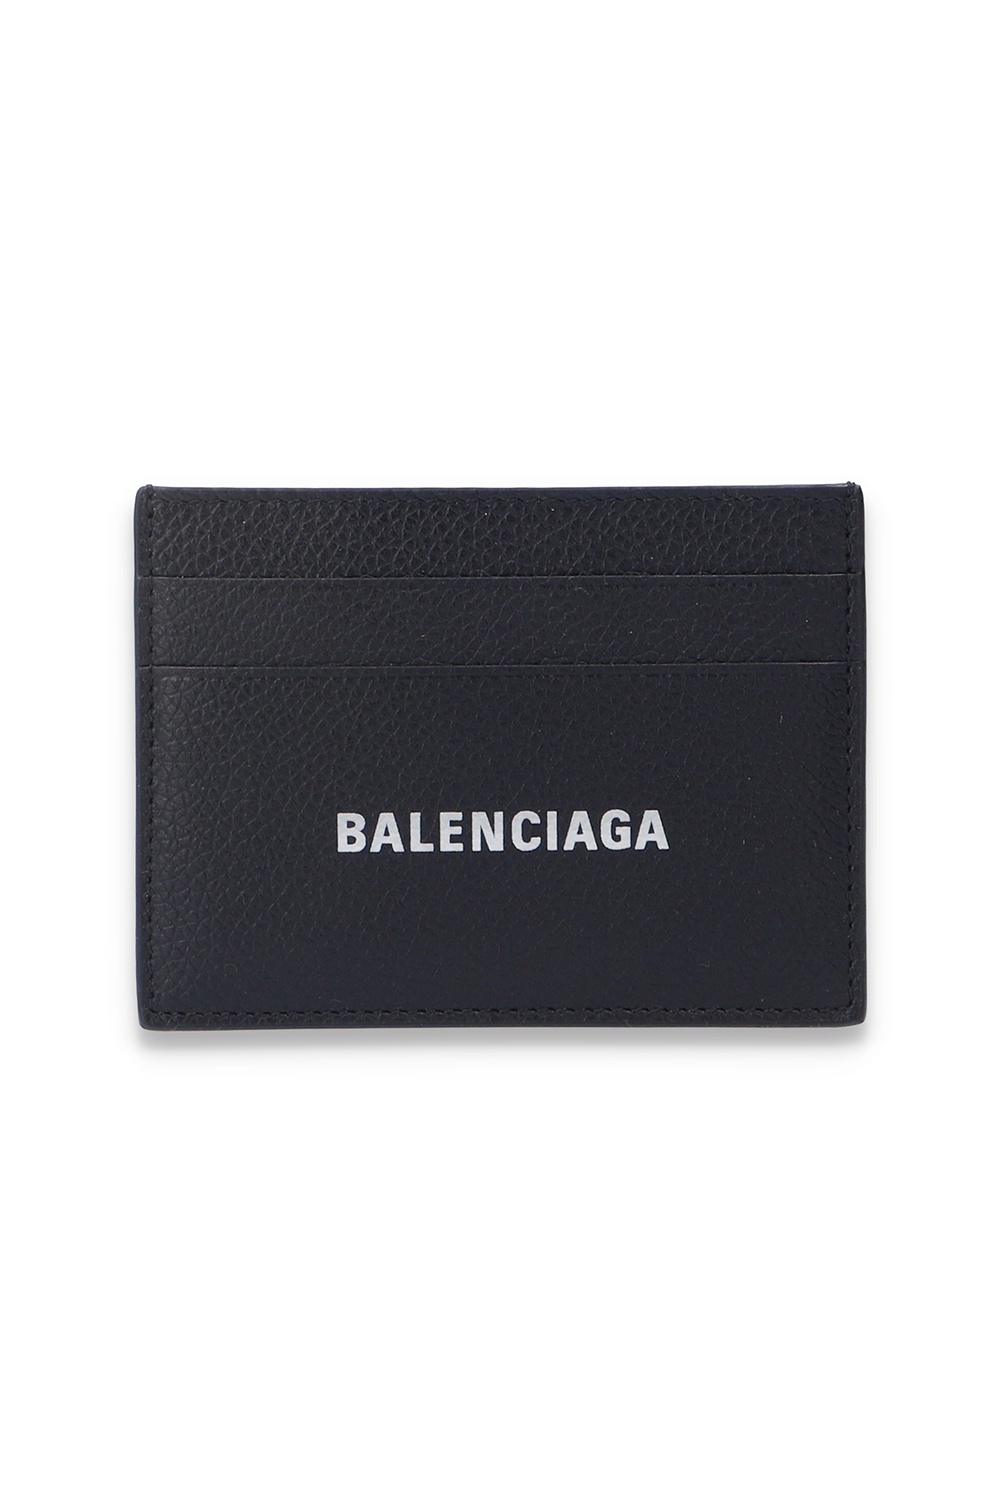 Balenciaga Card Holder Online, 57% OFF | www.santramonsagratcor.cat